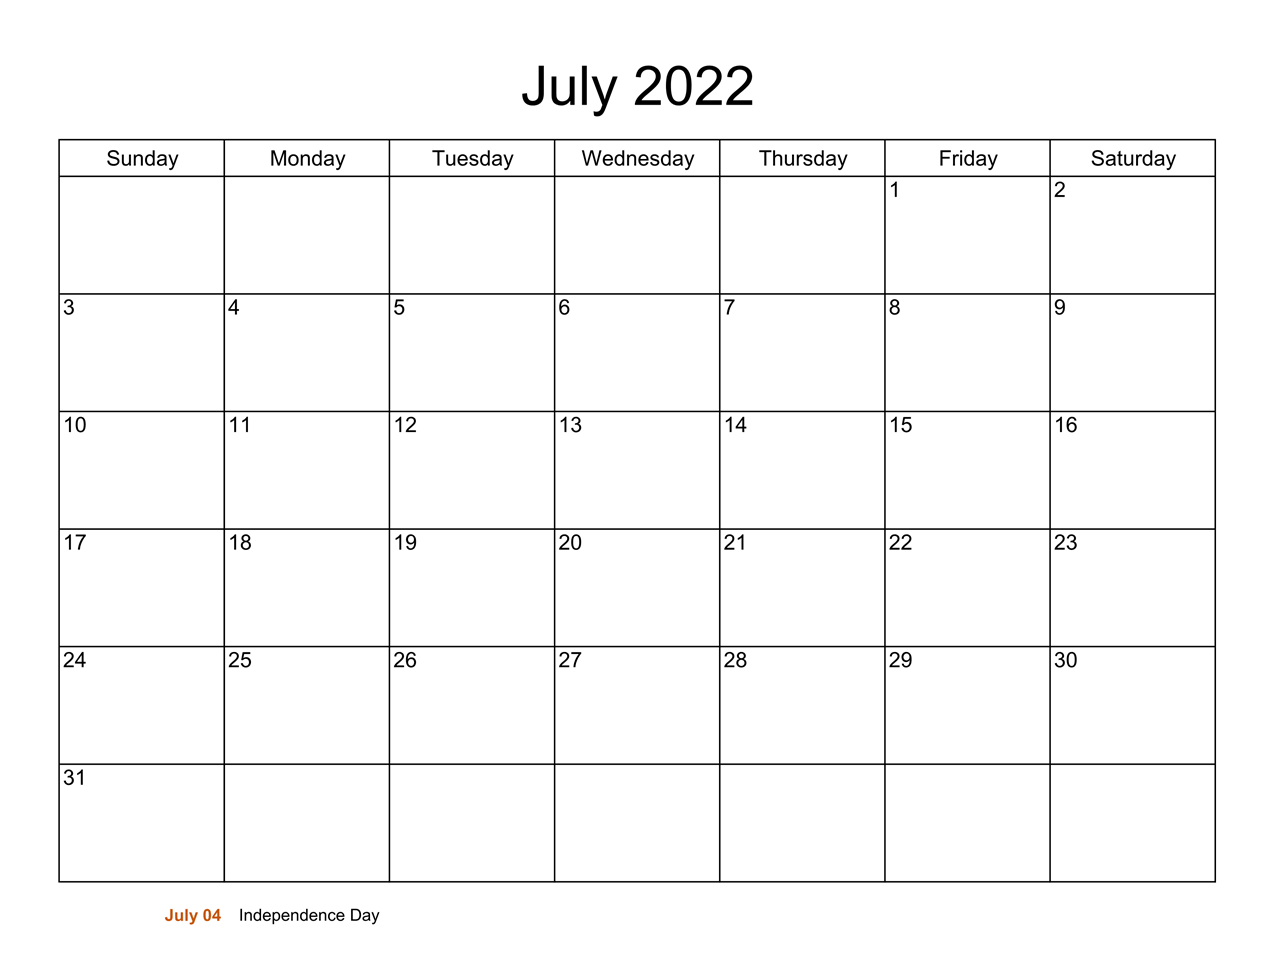 Cute July 2022 Calendar